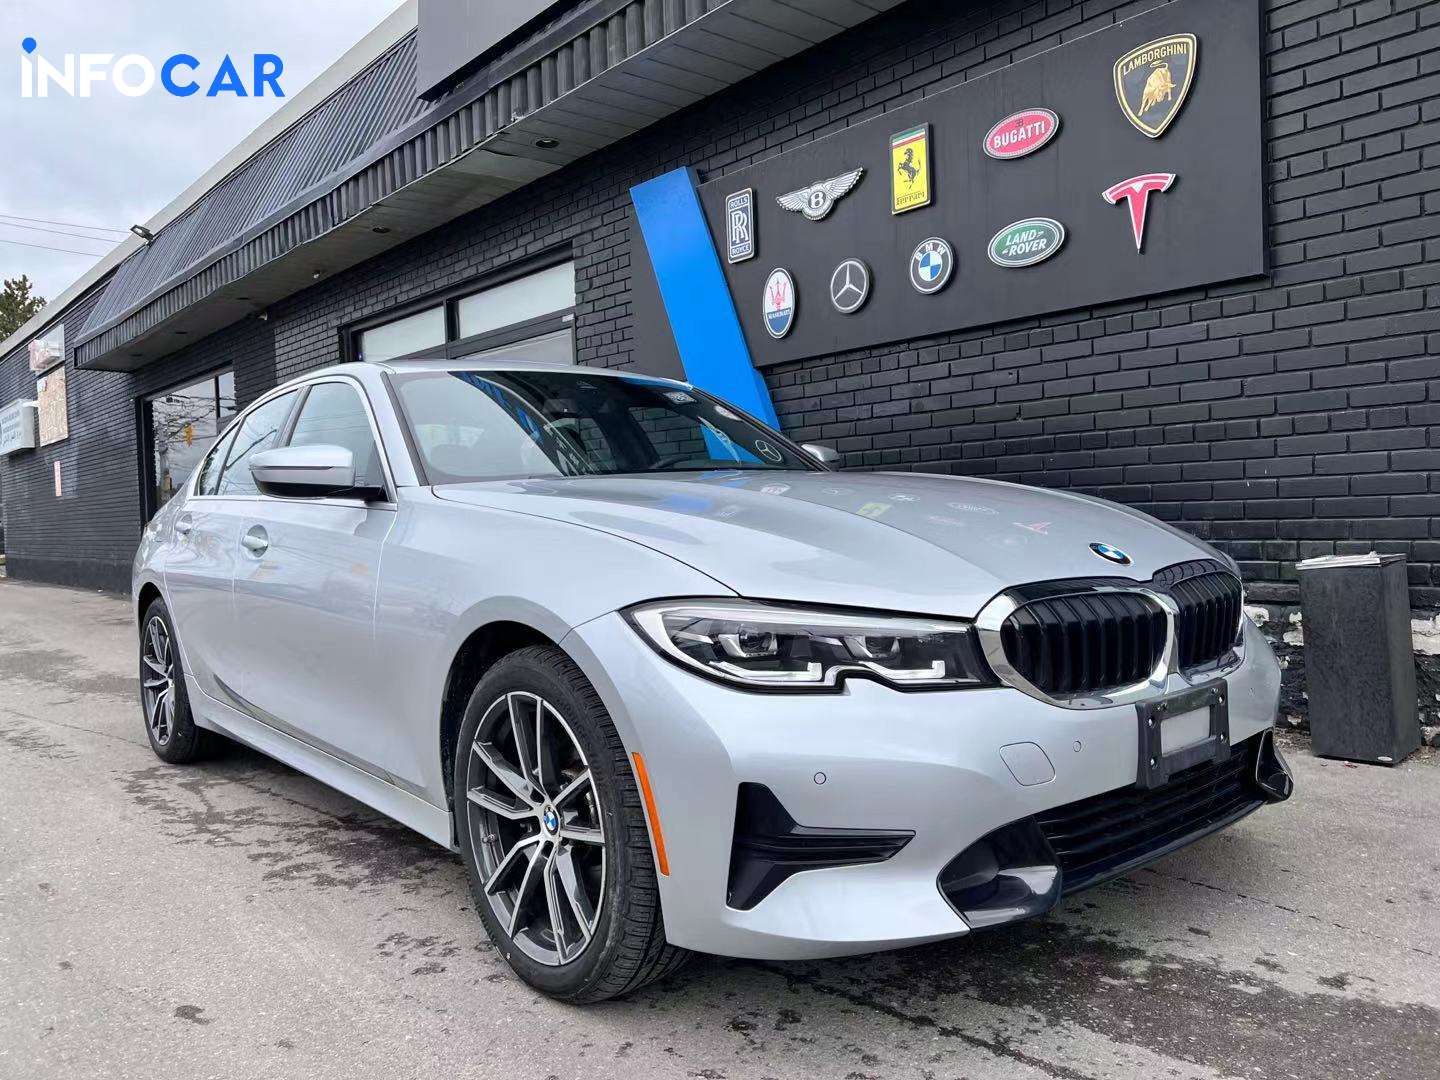 2019 BMW 3-Series 330 xdrive - INFOCAR - Toronto Auto Trading Platform